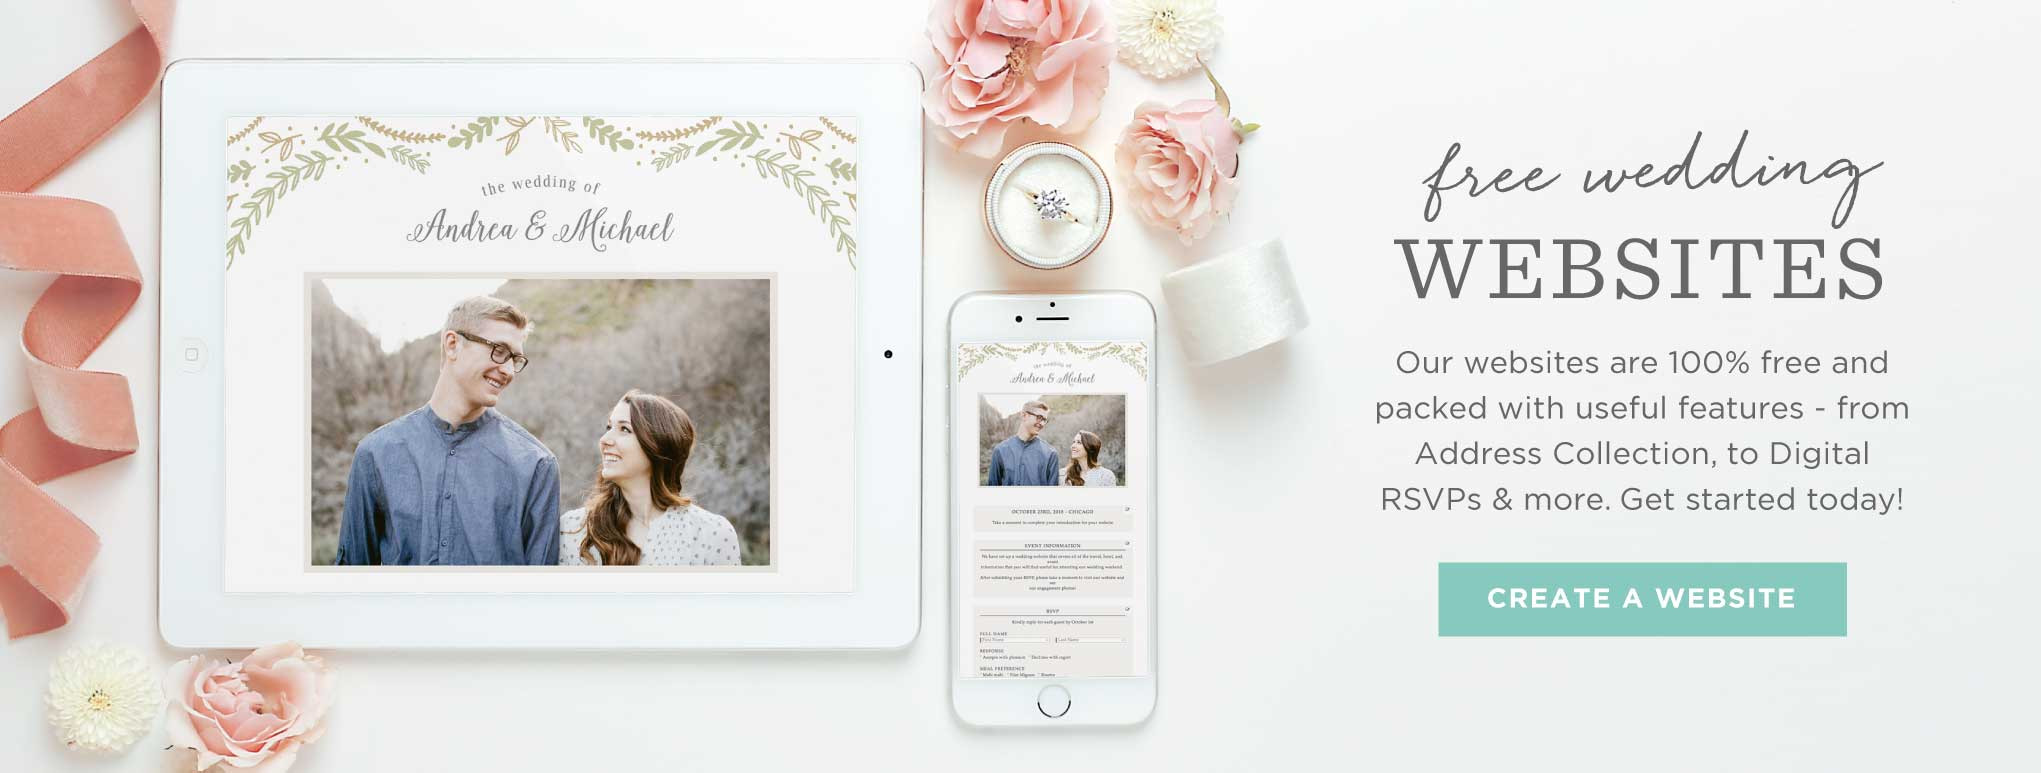 Wedding Decor Websites
 Websites